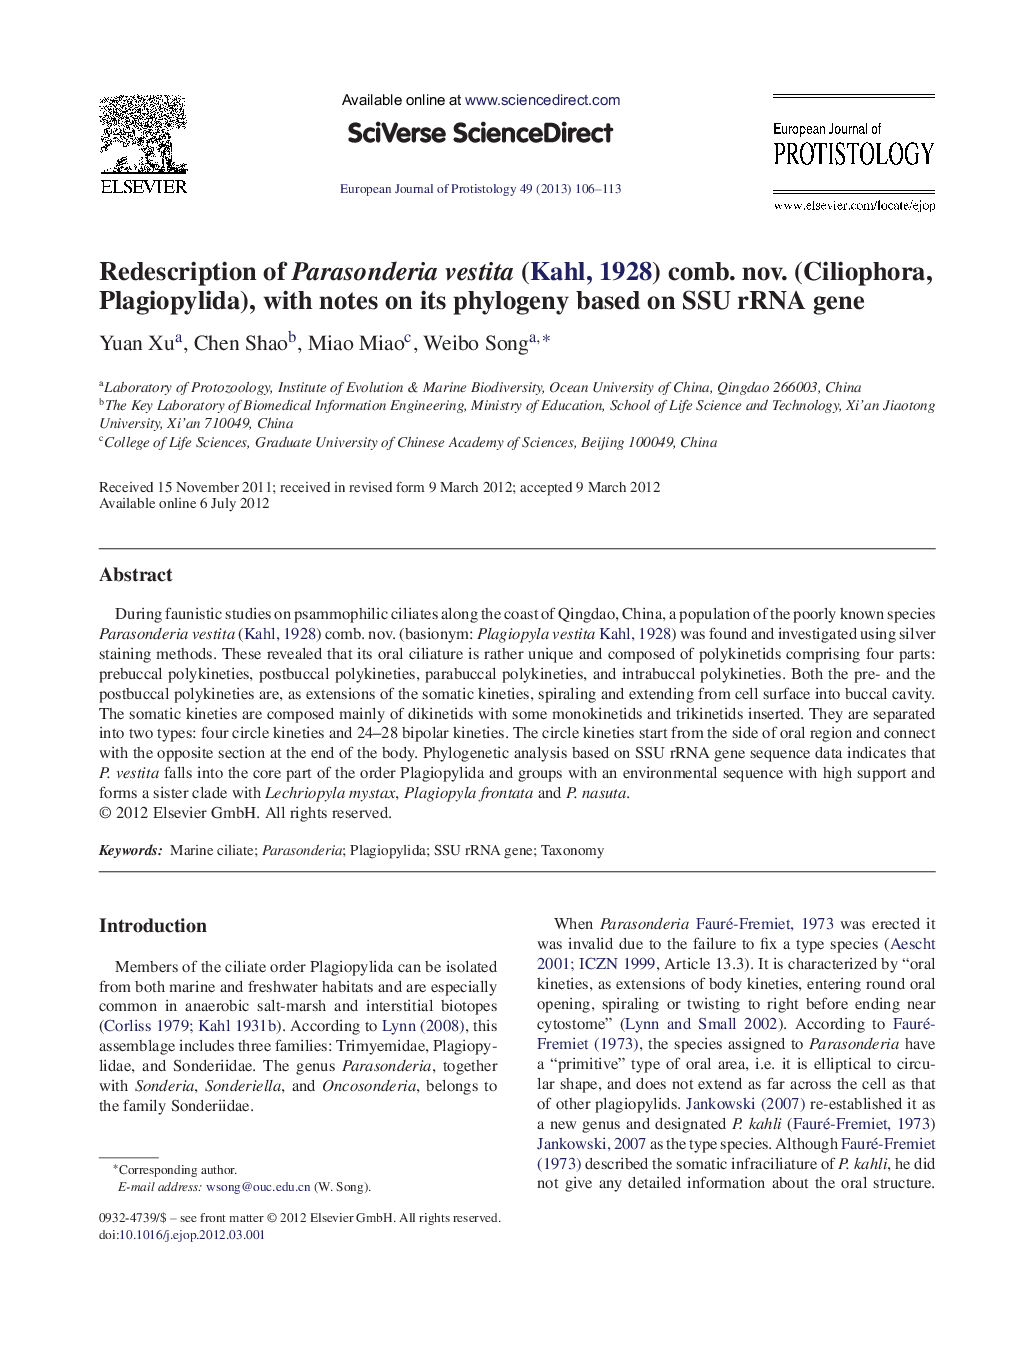 Redescription of Parasonderia vestita ( Kahl, 1928) comb. nov. (Ciliophora, Plagiopylida), with notes on its phylogeny based on SSU rRNA gene